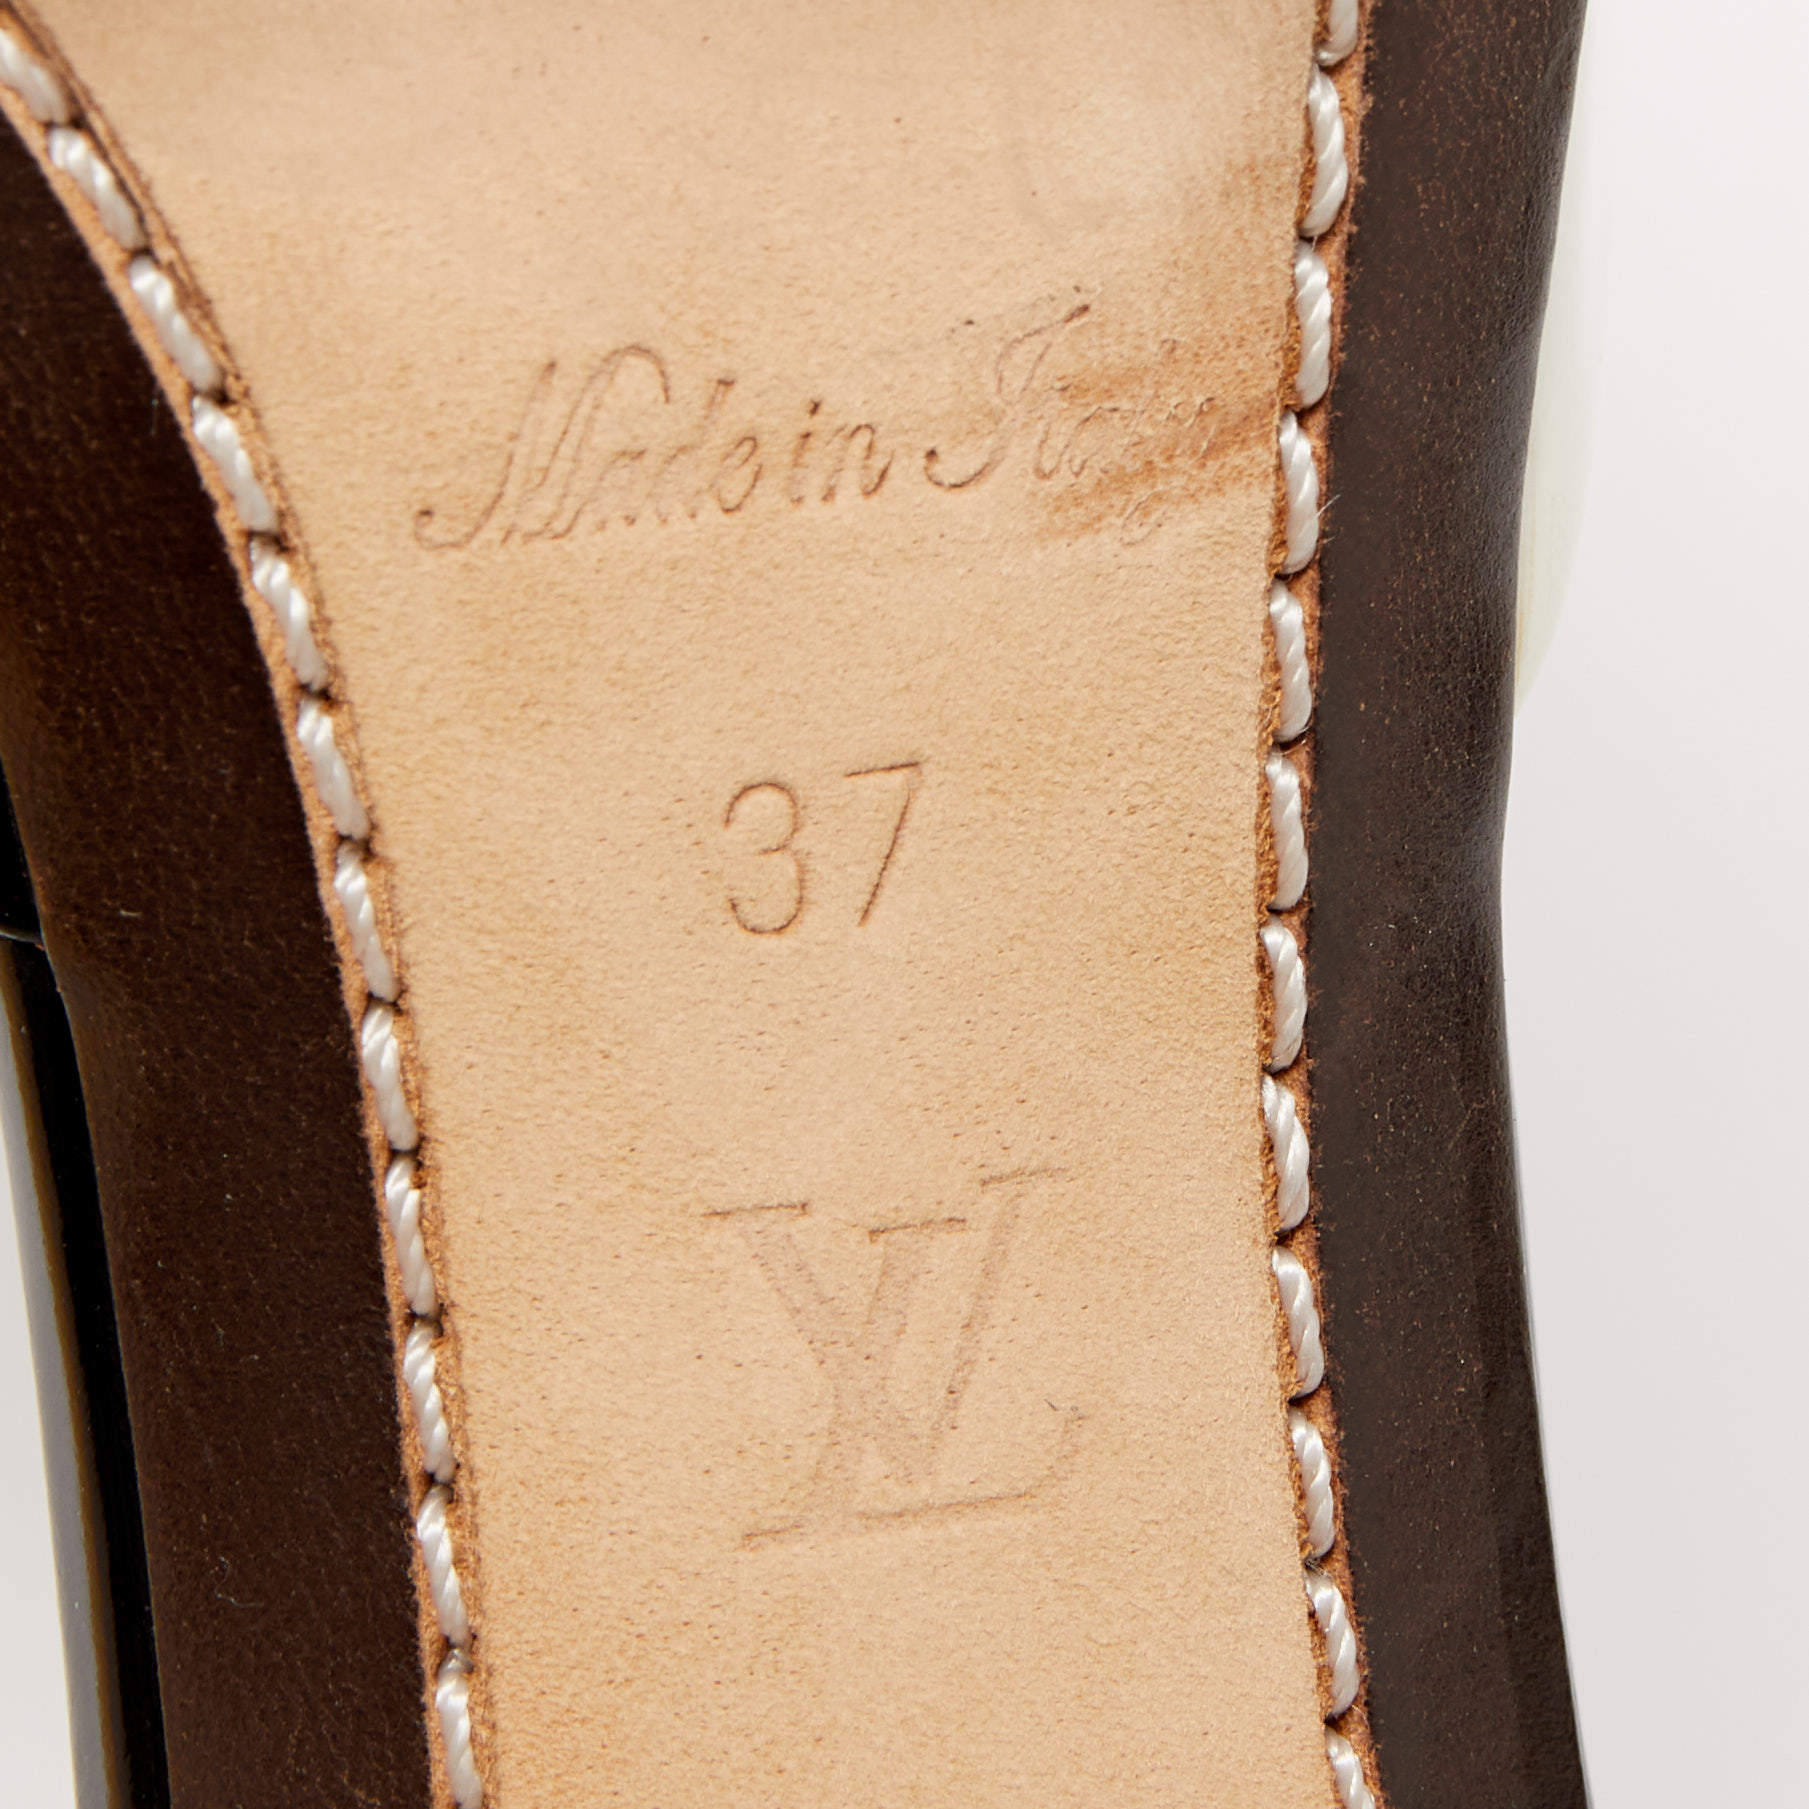 Louis Vuitton - Taupe Leather Bow Pumps w/ Block Heel Sz 8